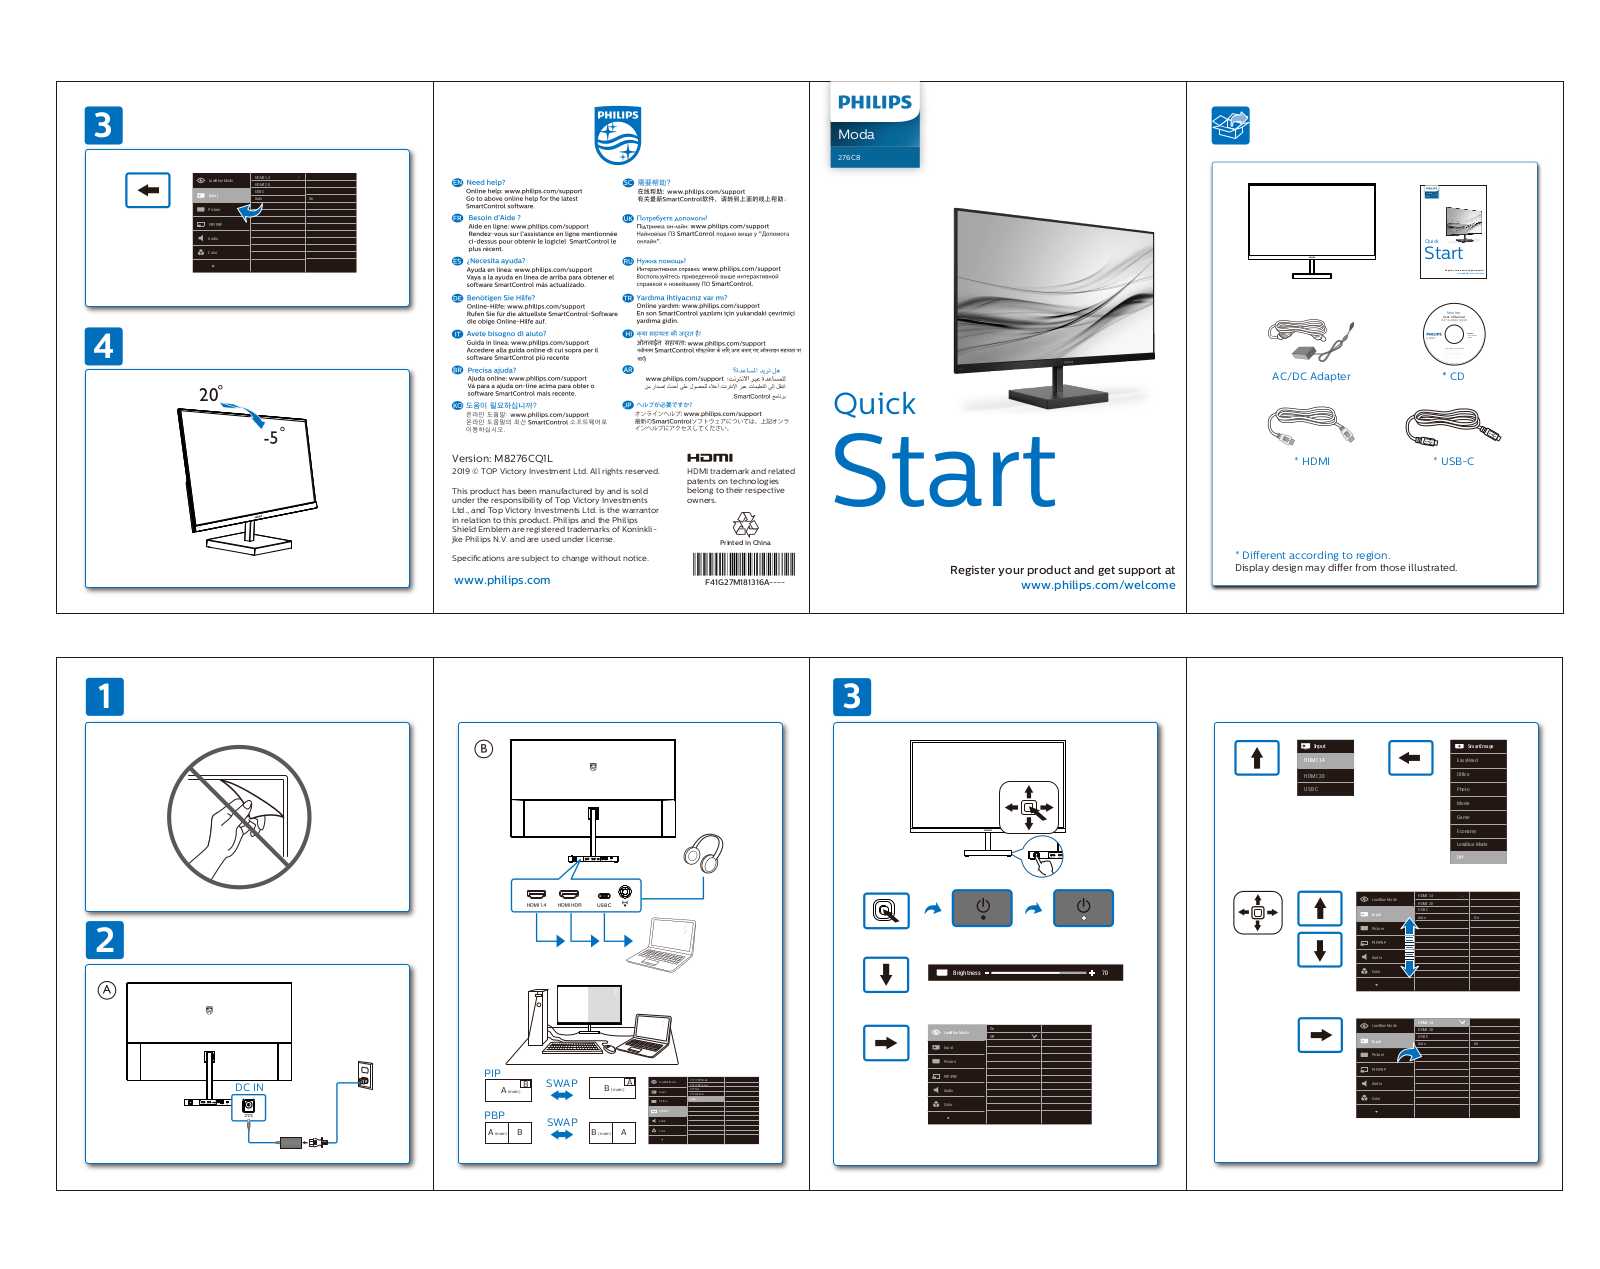 Philips 276C8/00 Quick Start Guide